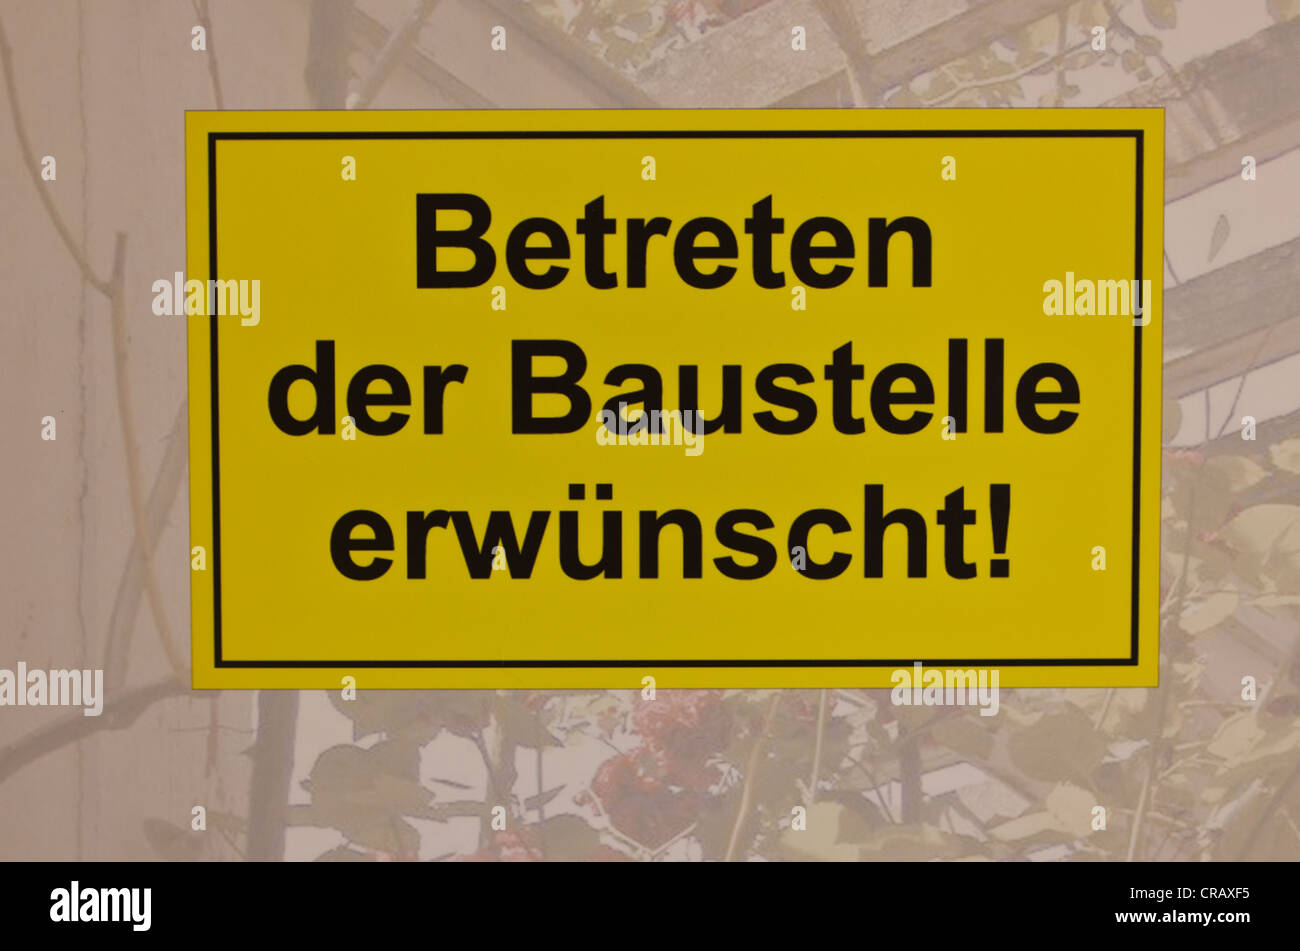 Sign, Betreten der Baustelle erwuenscht!, German for entering the construction site is encouraged Stock Photo